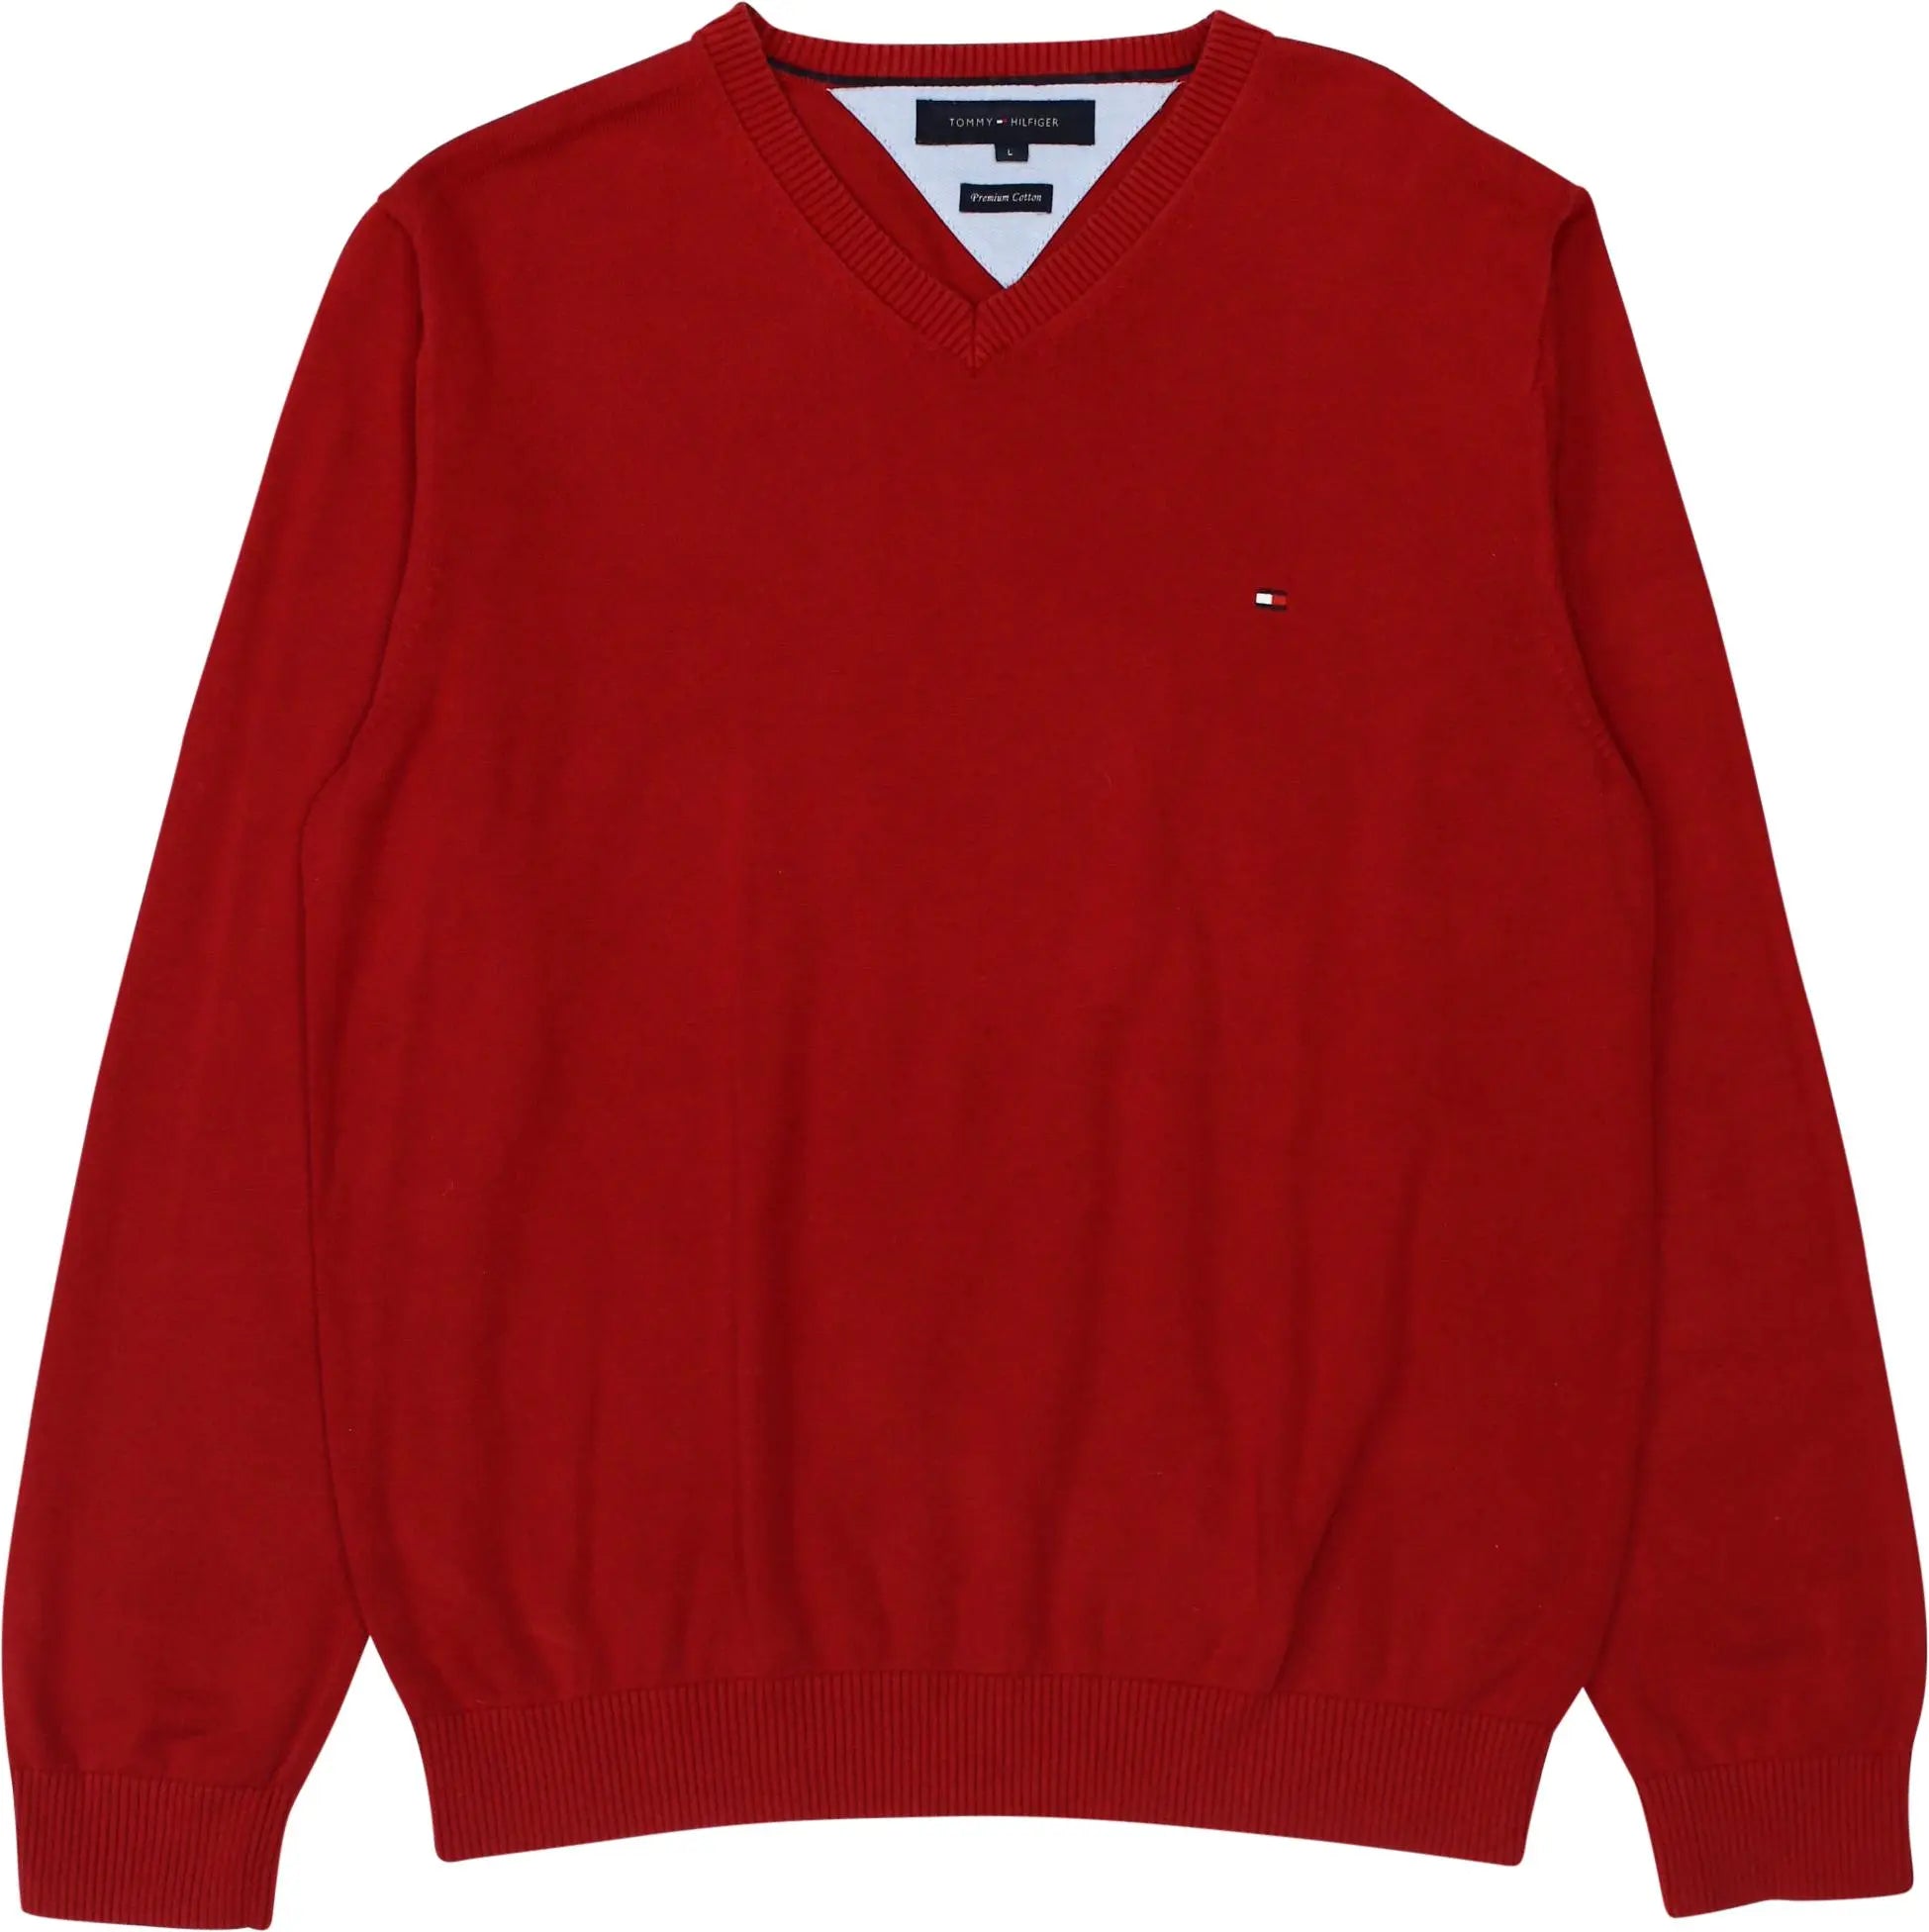 Tommy Hilfiger - Red V-Neck Sweatshirt by Tommy Hilfiger- ThriftTale.com - Vintage and second handclothing